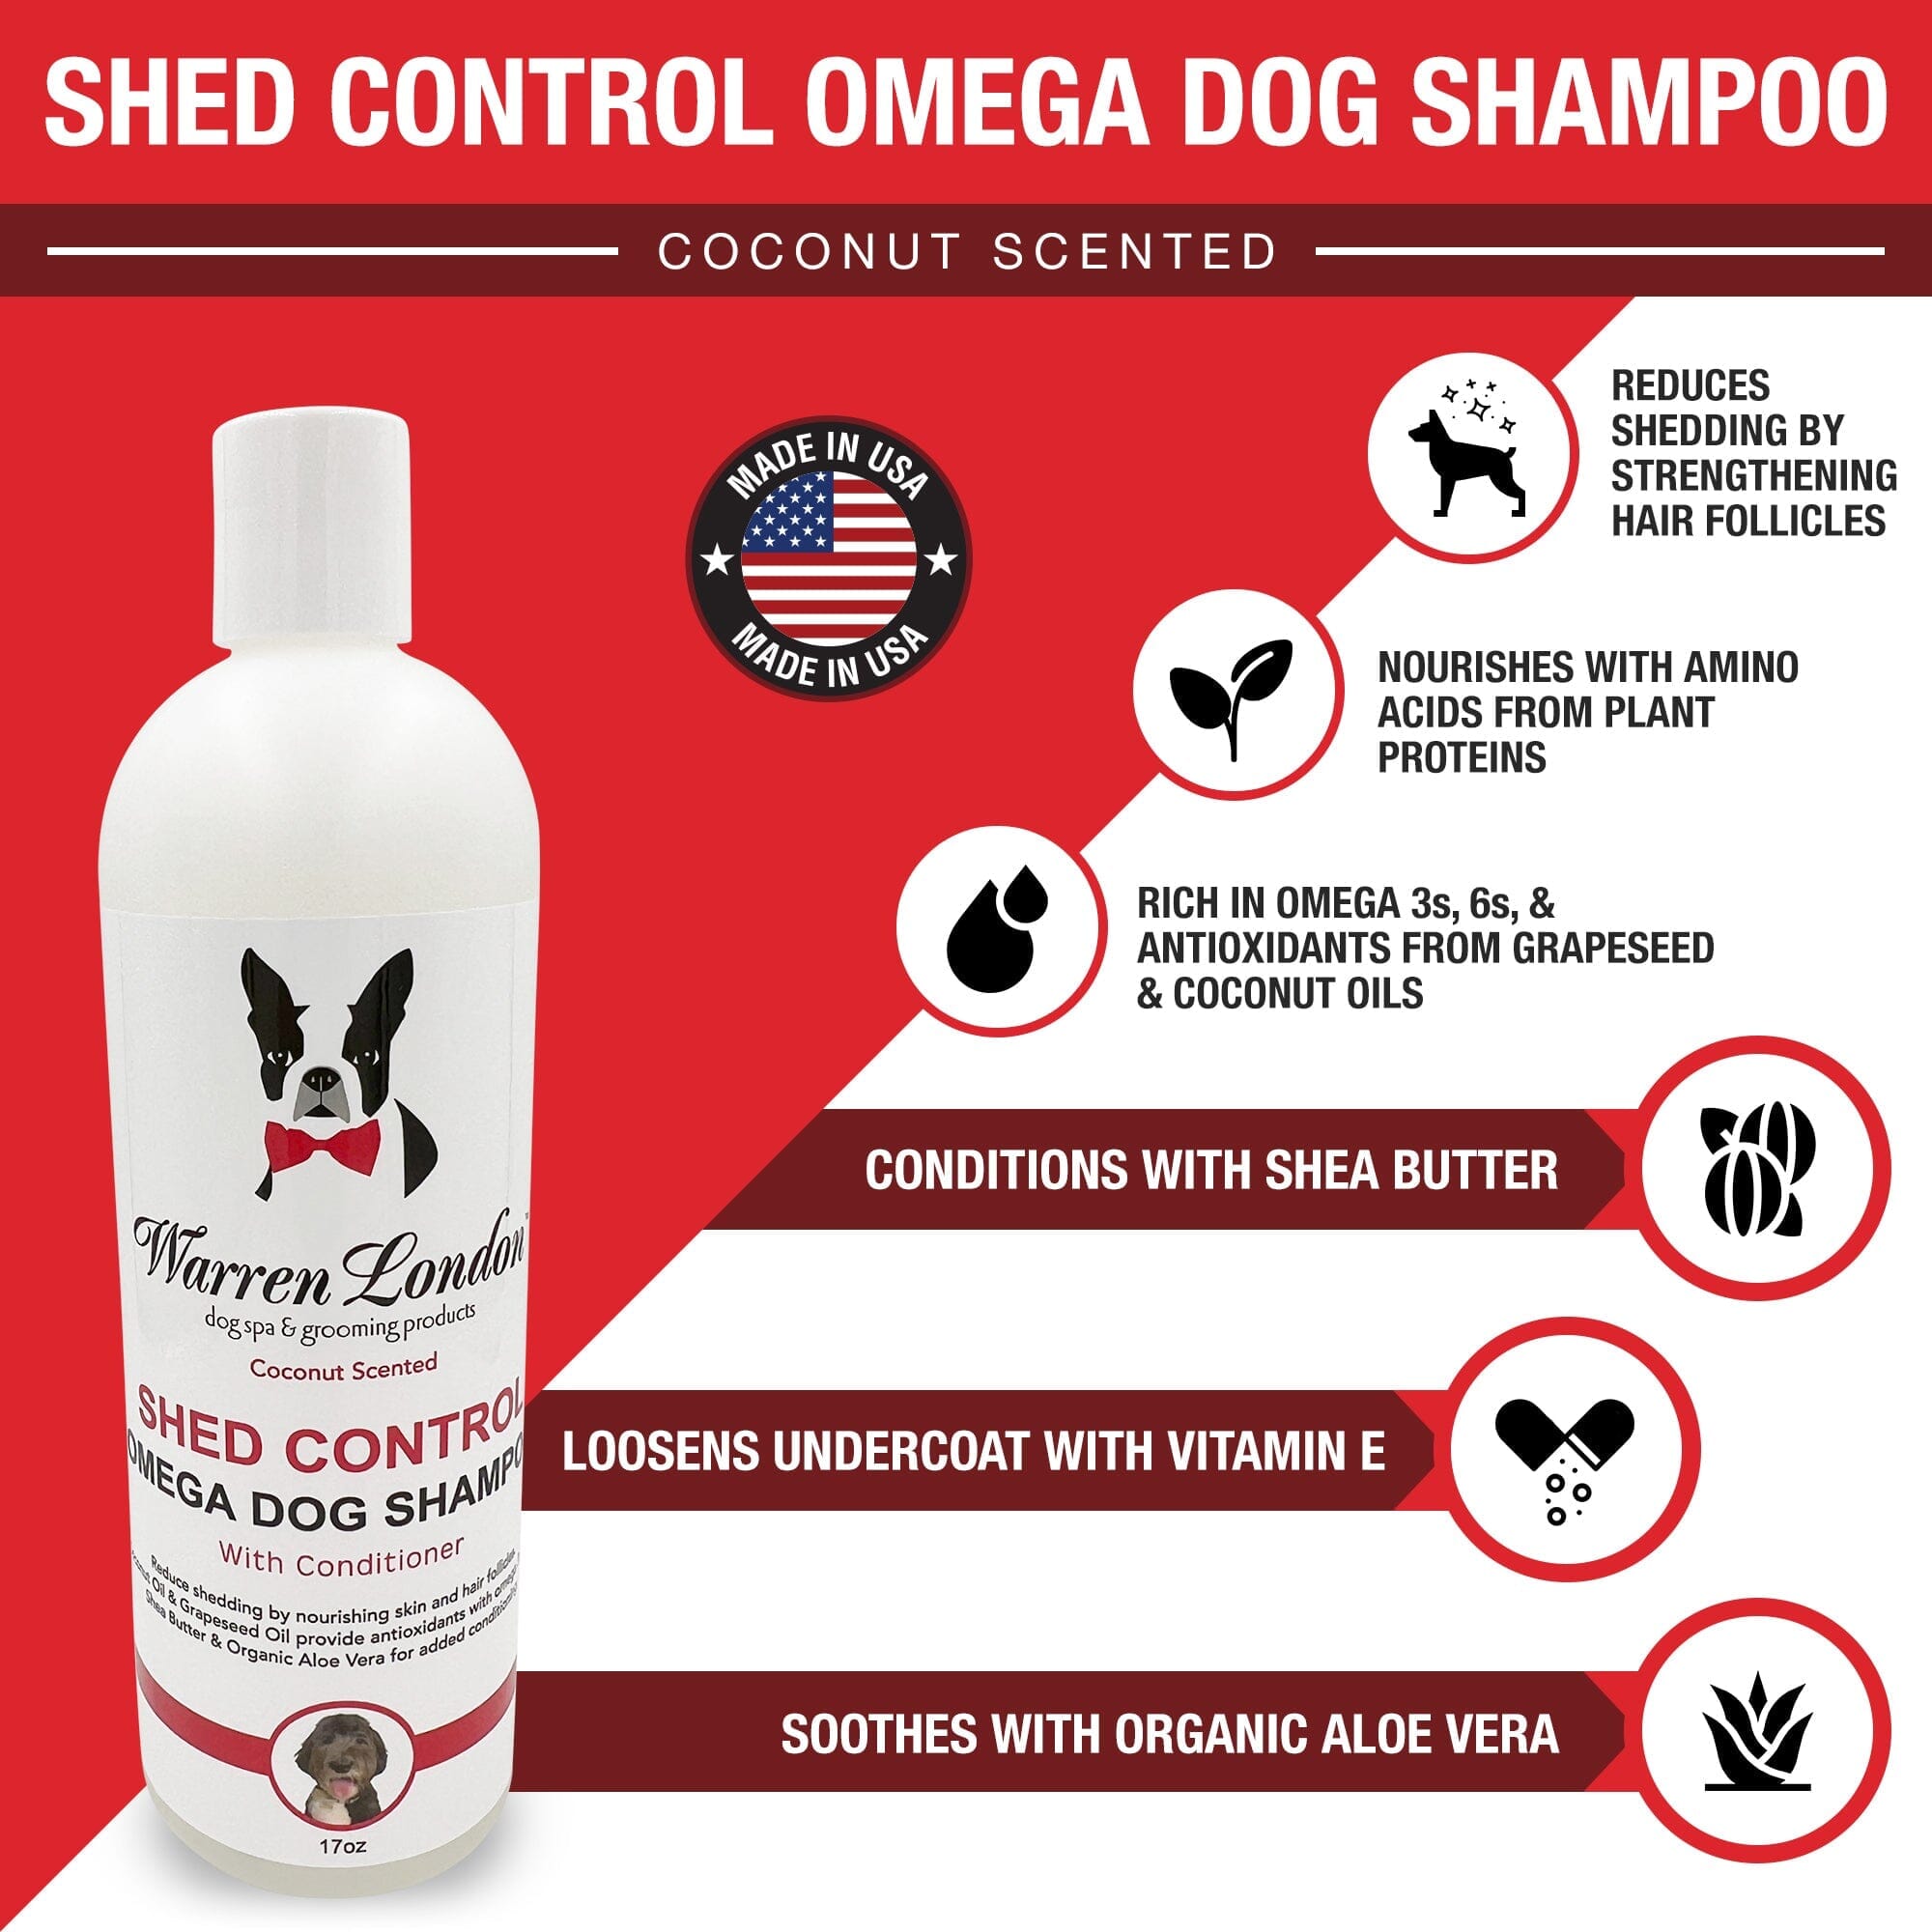 Shed Control Shampoo for Dogs - Professional Size Dog Shampoo Warren London 